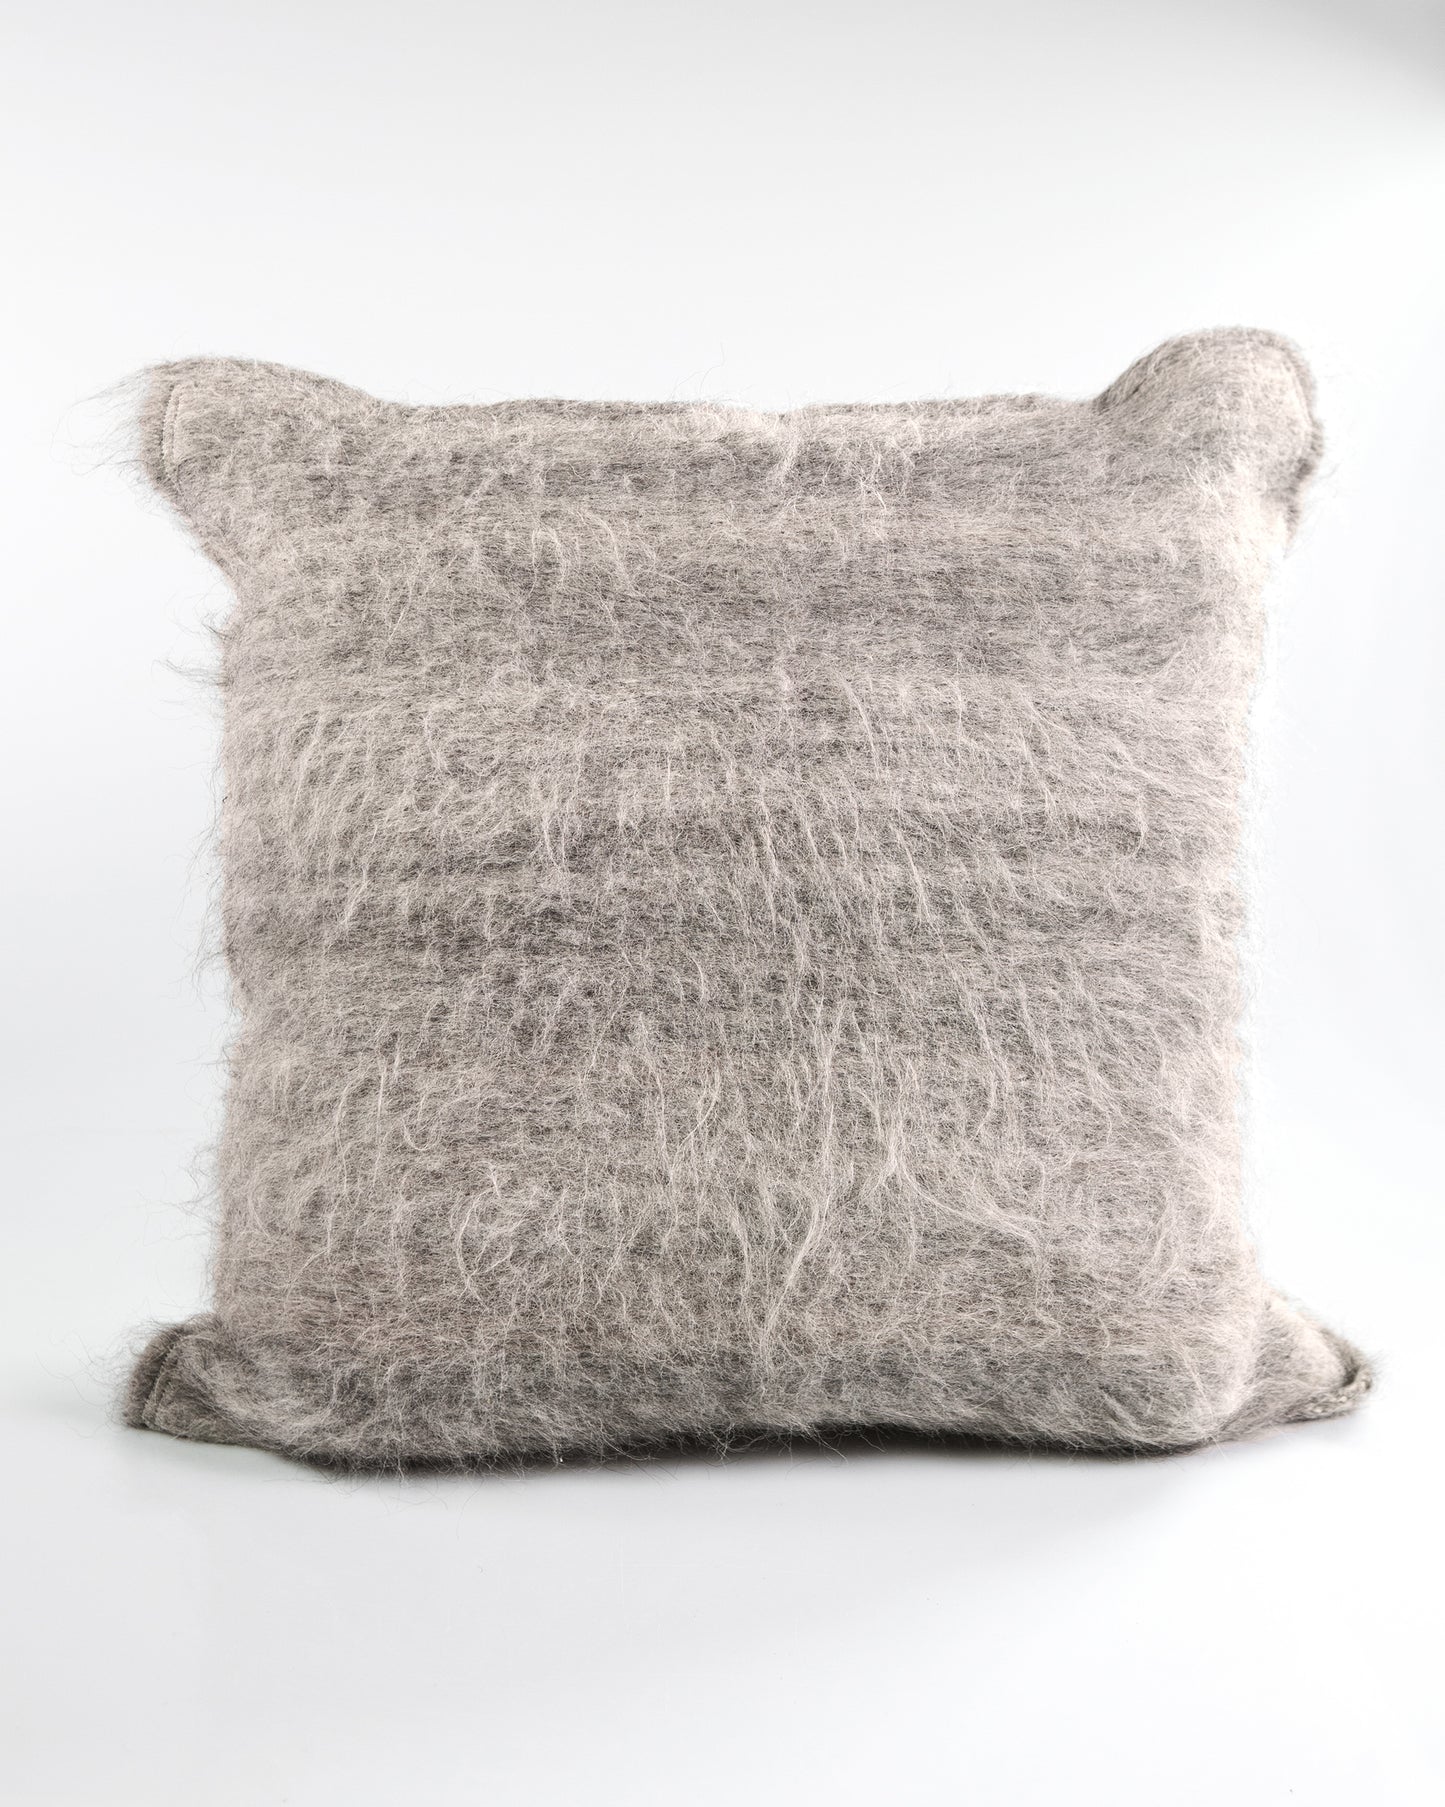 Awanay Llama Pillow - Silver